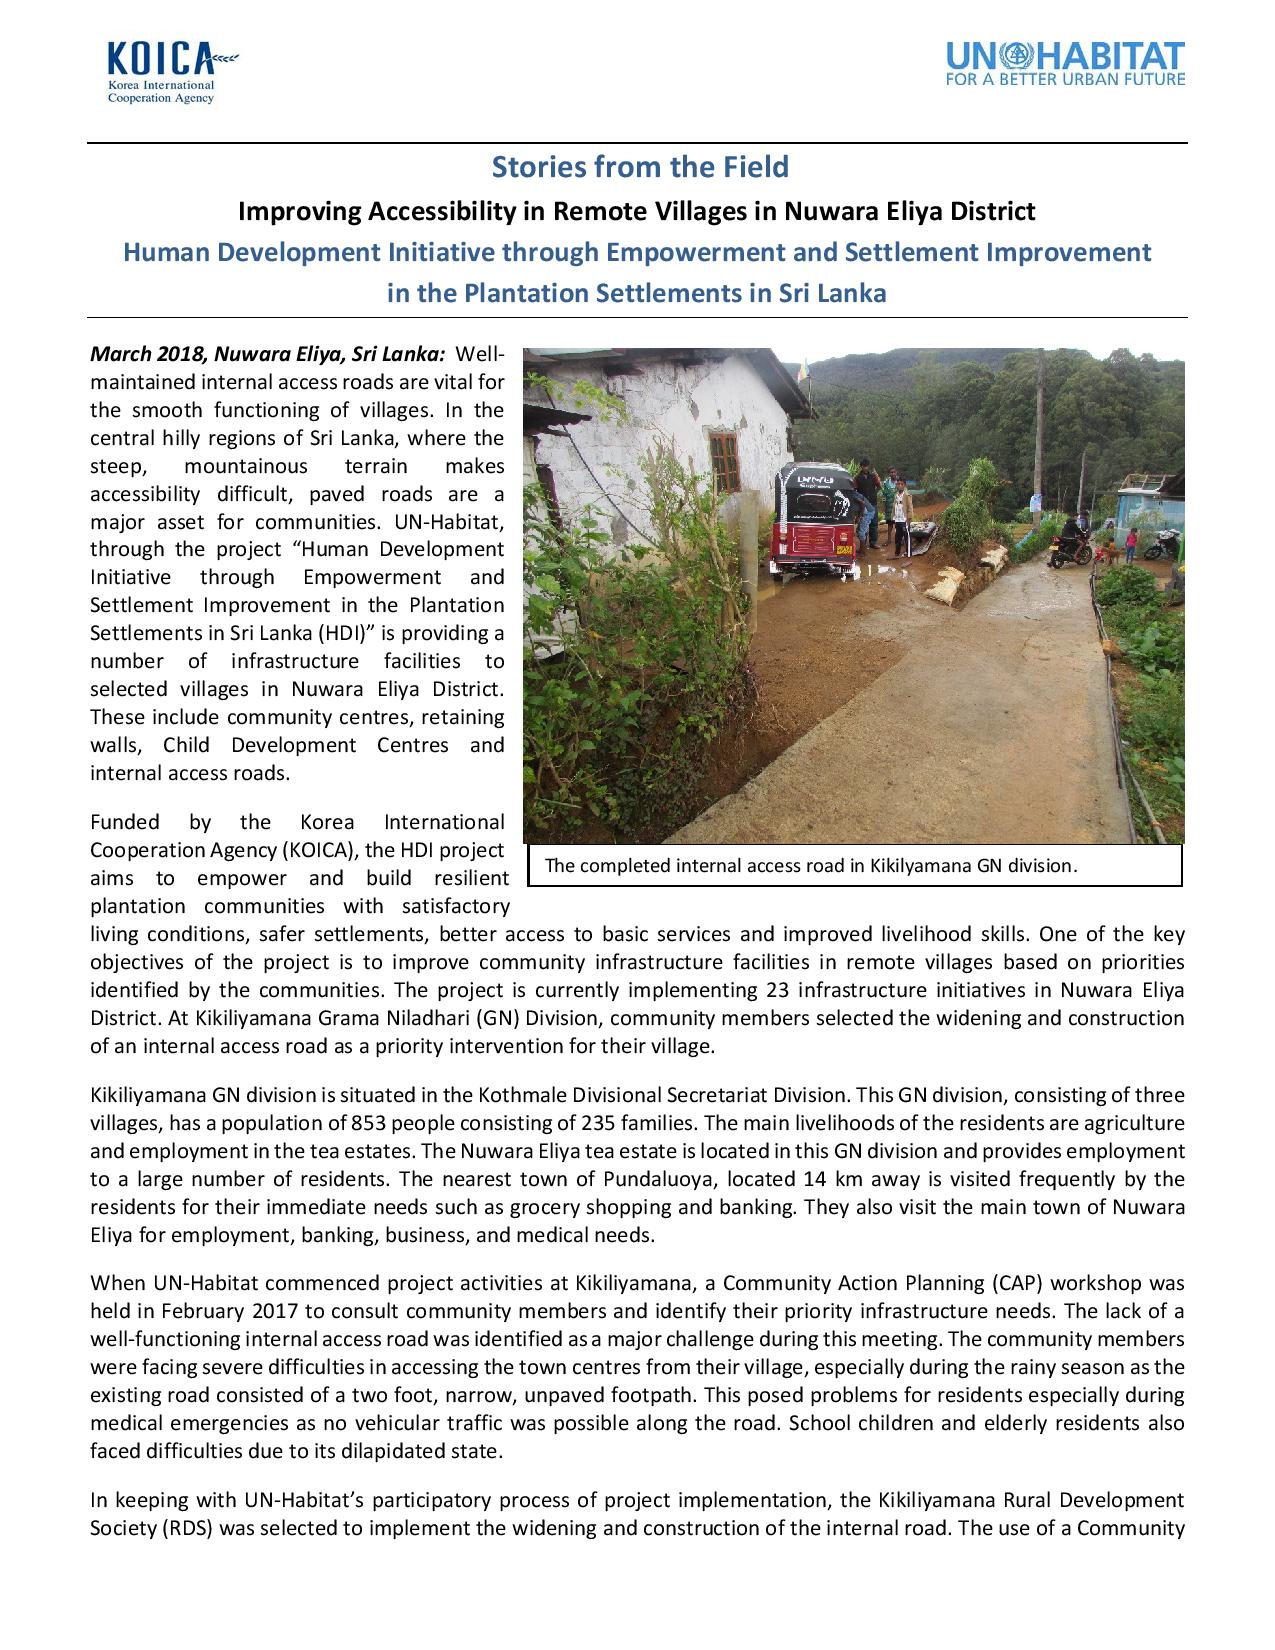 Sri Lanka HDI Case Study: Improving Accessibility in Remote Villages in Nuwara Eliya District